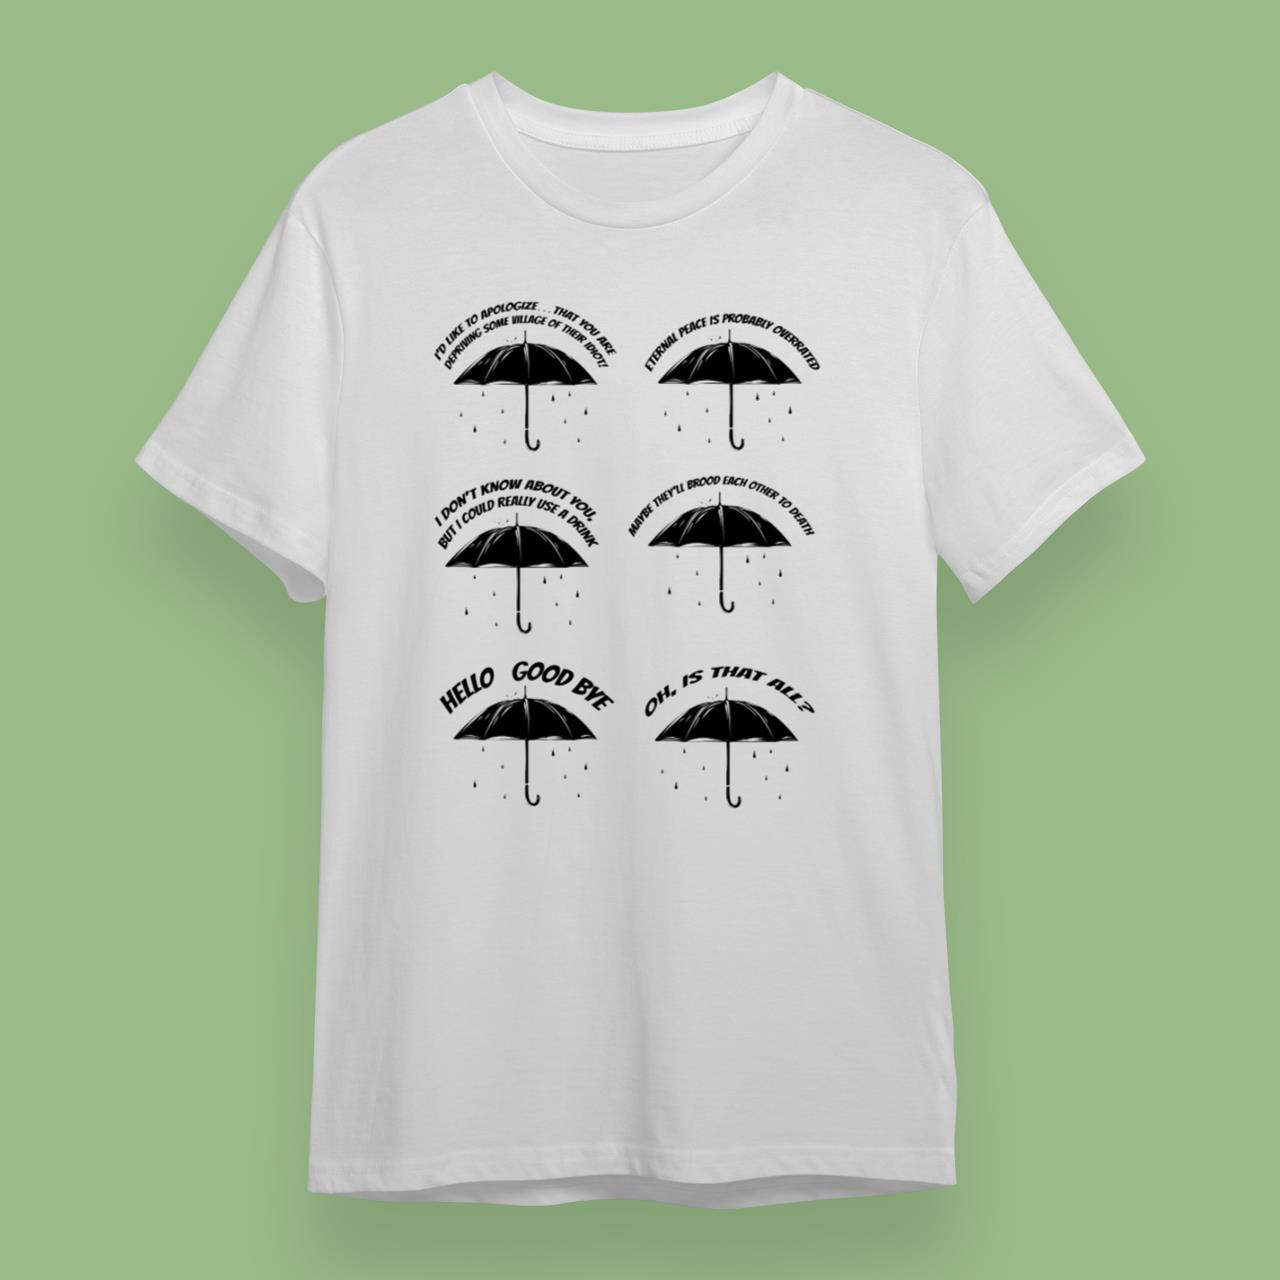 Klaus Umbrella Academy Quotes T-Shirt